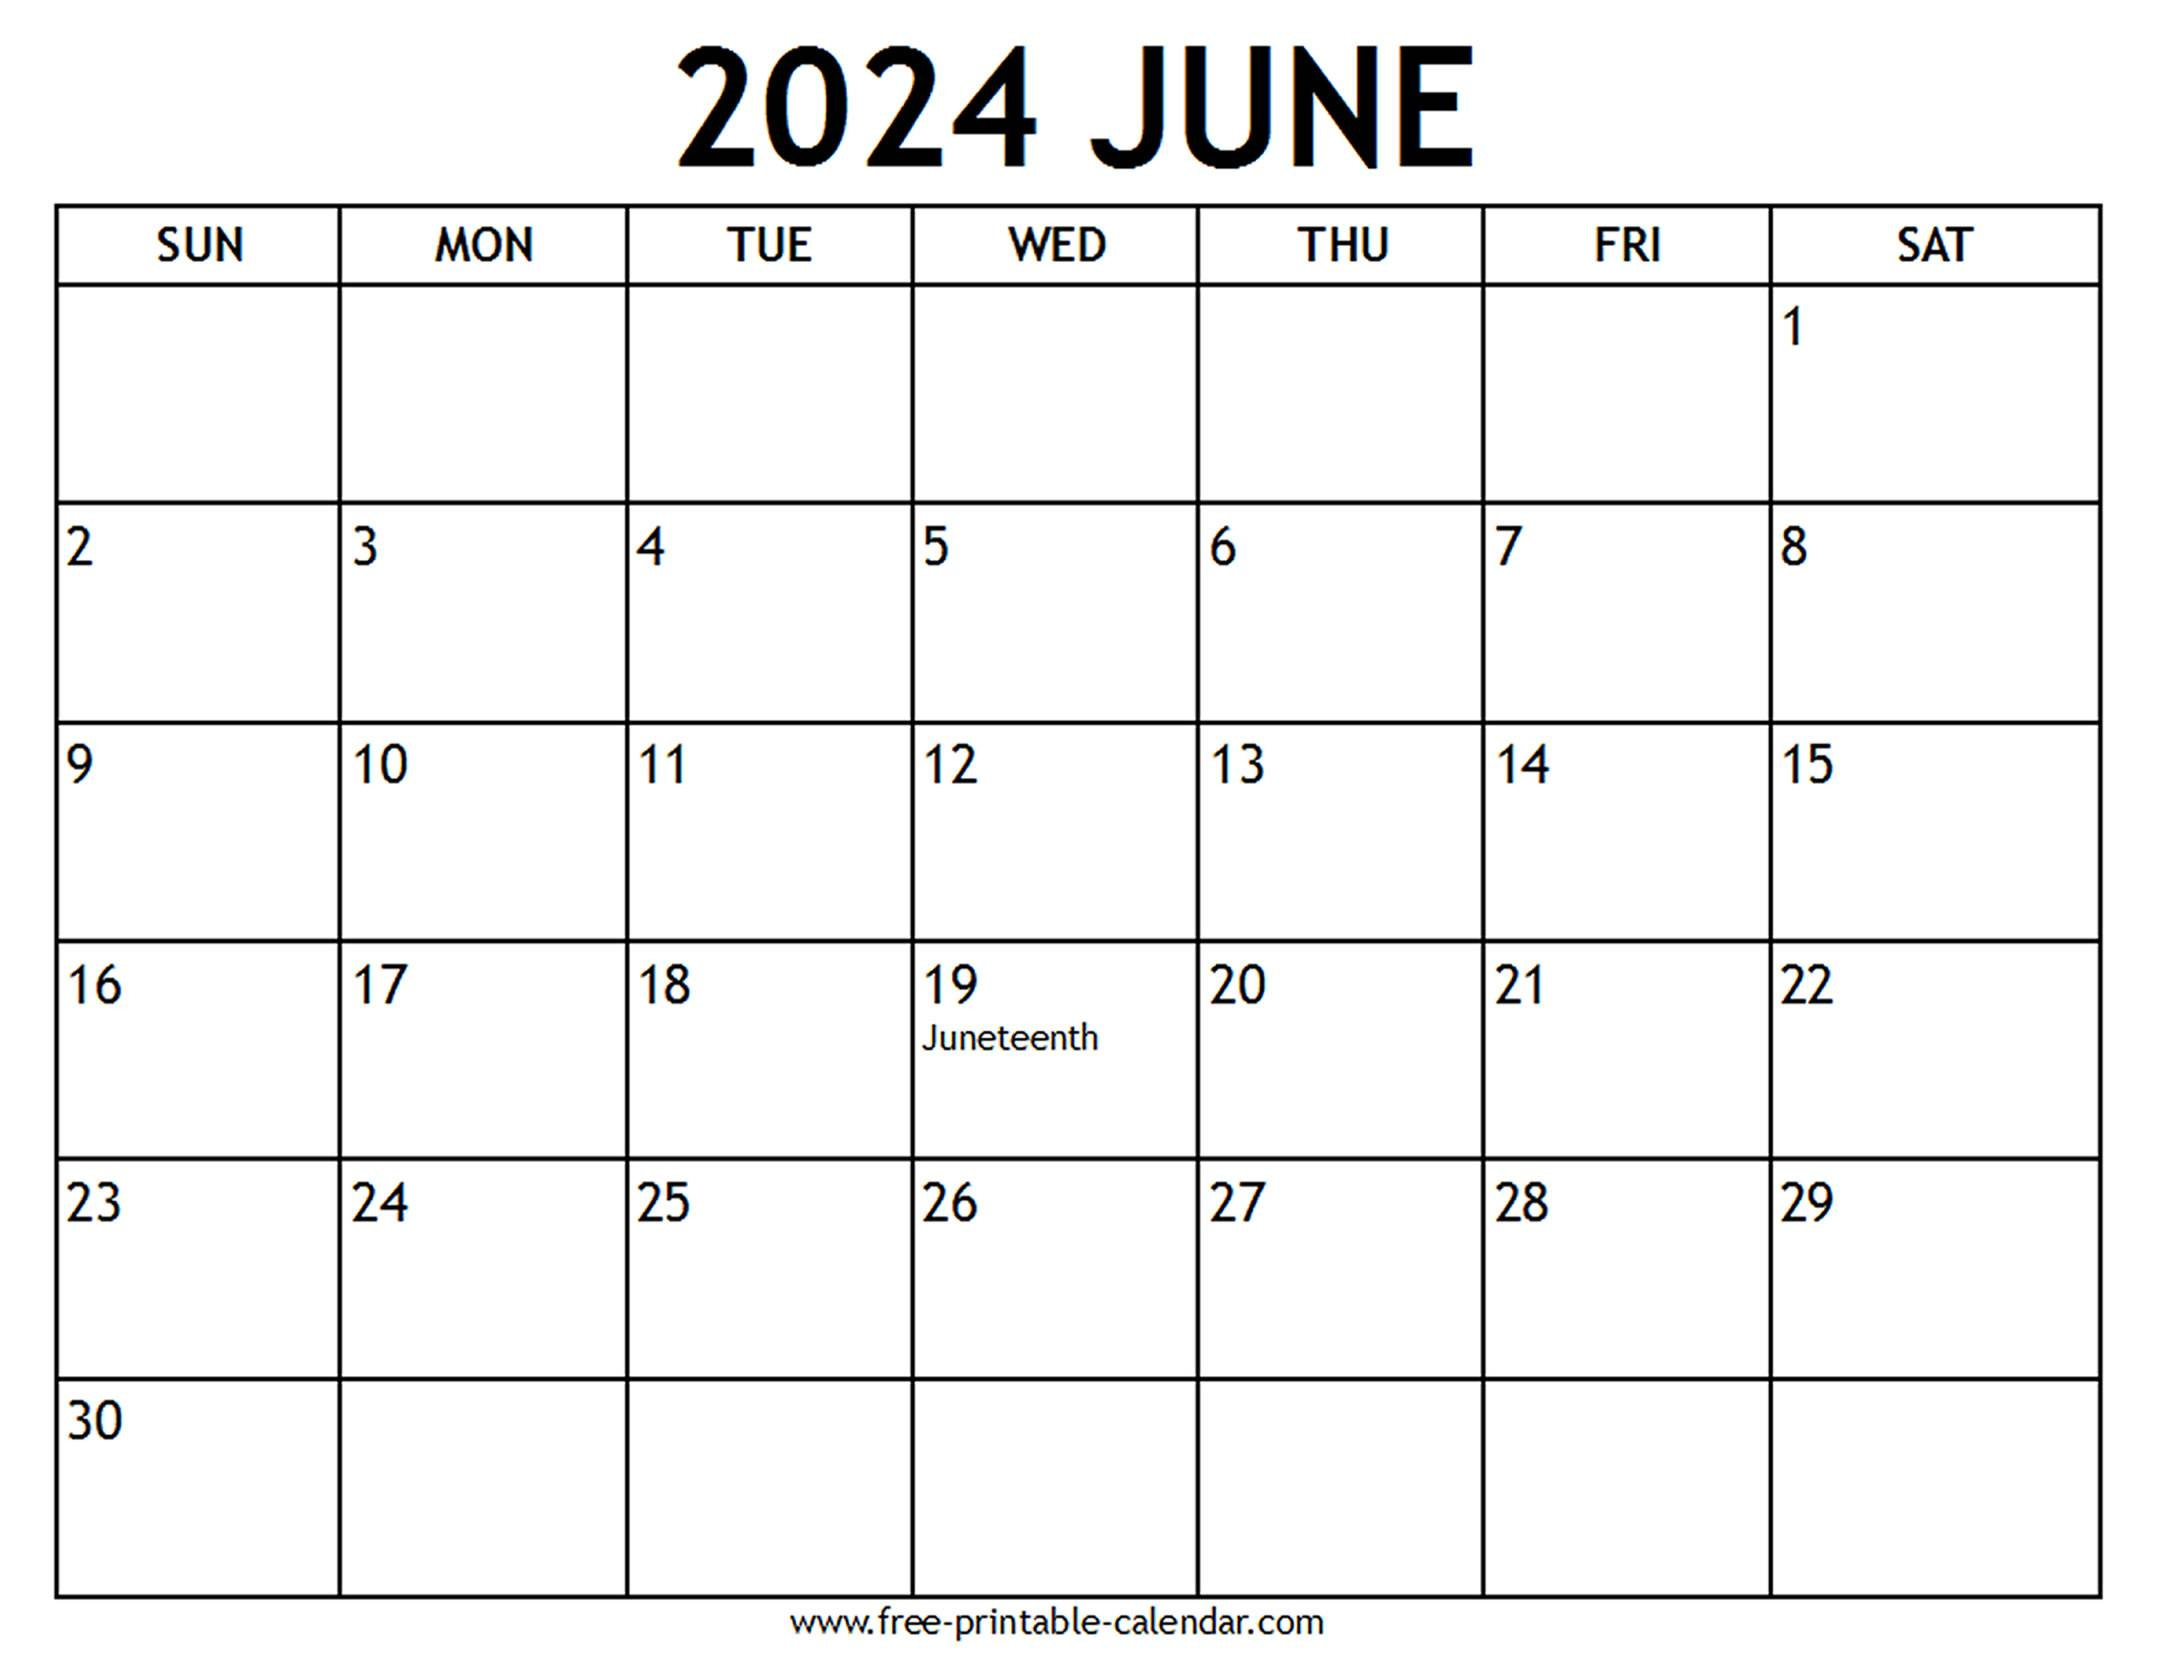 June 2024 Calendar Us Holidays - Free-Printable-Calendar with June 2024 Holidays Calendar